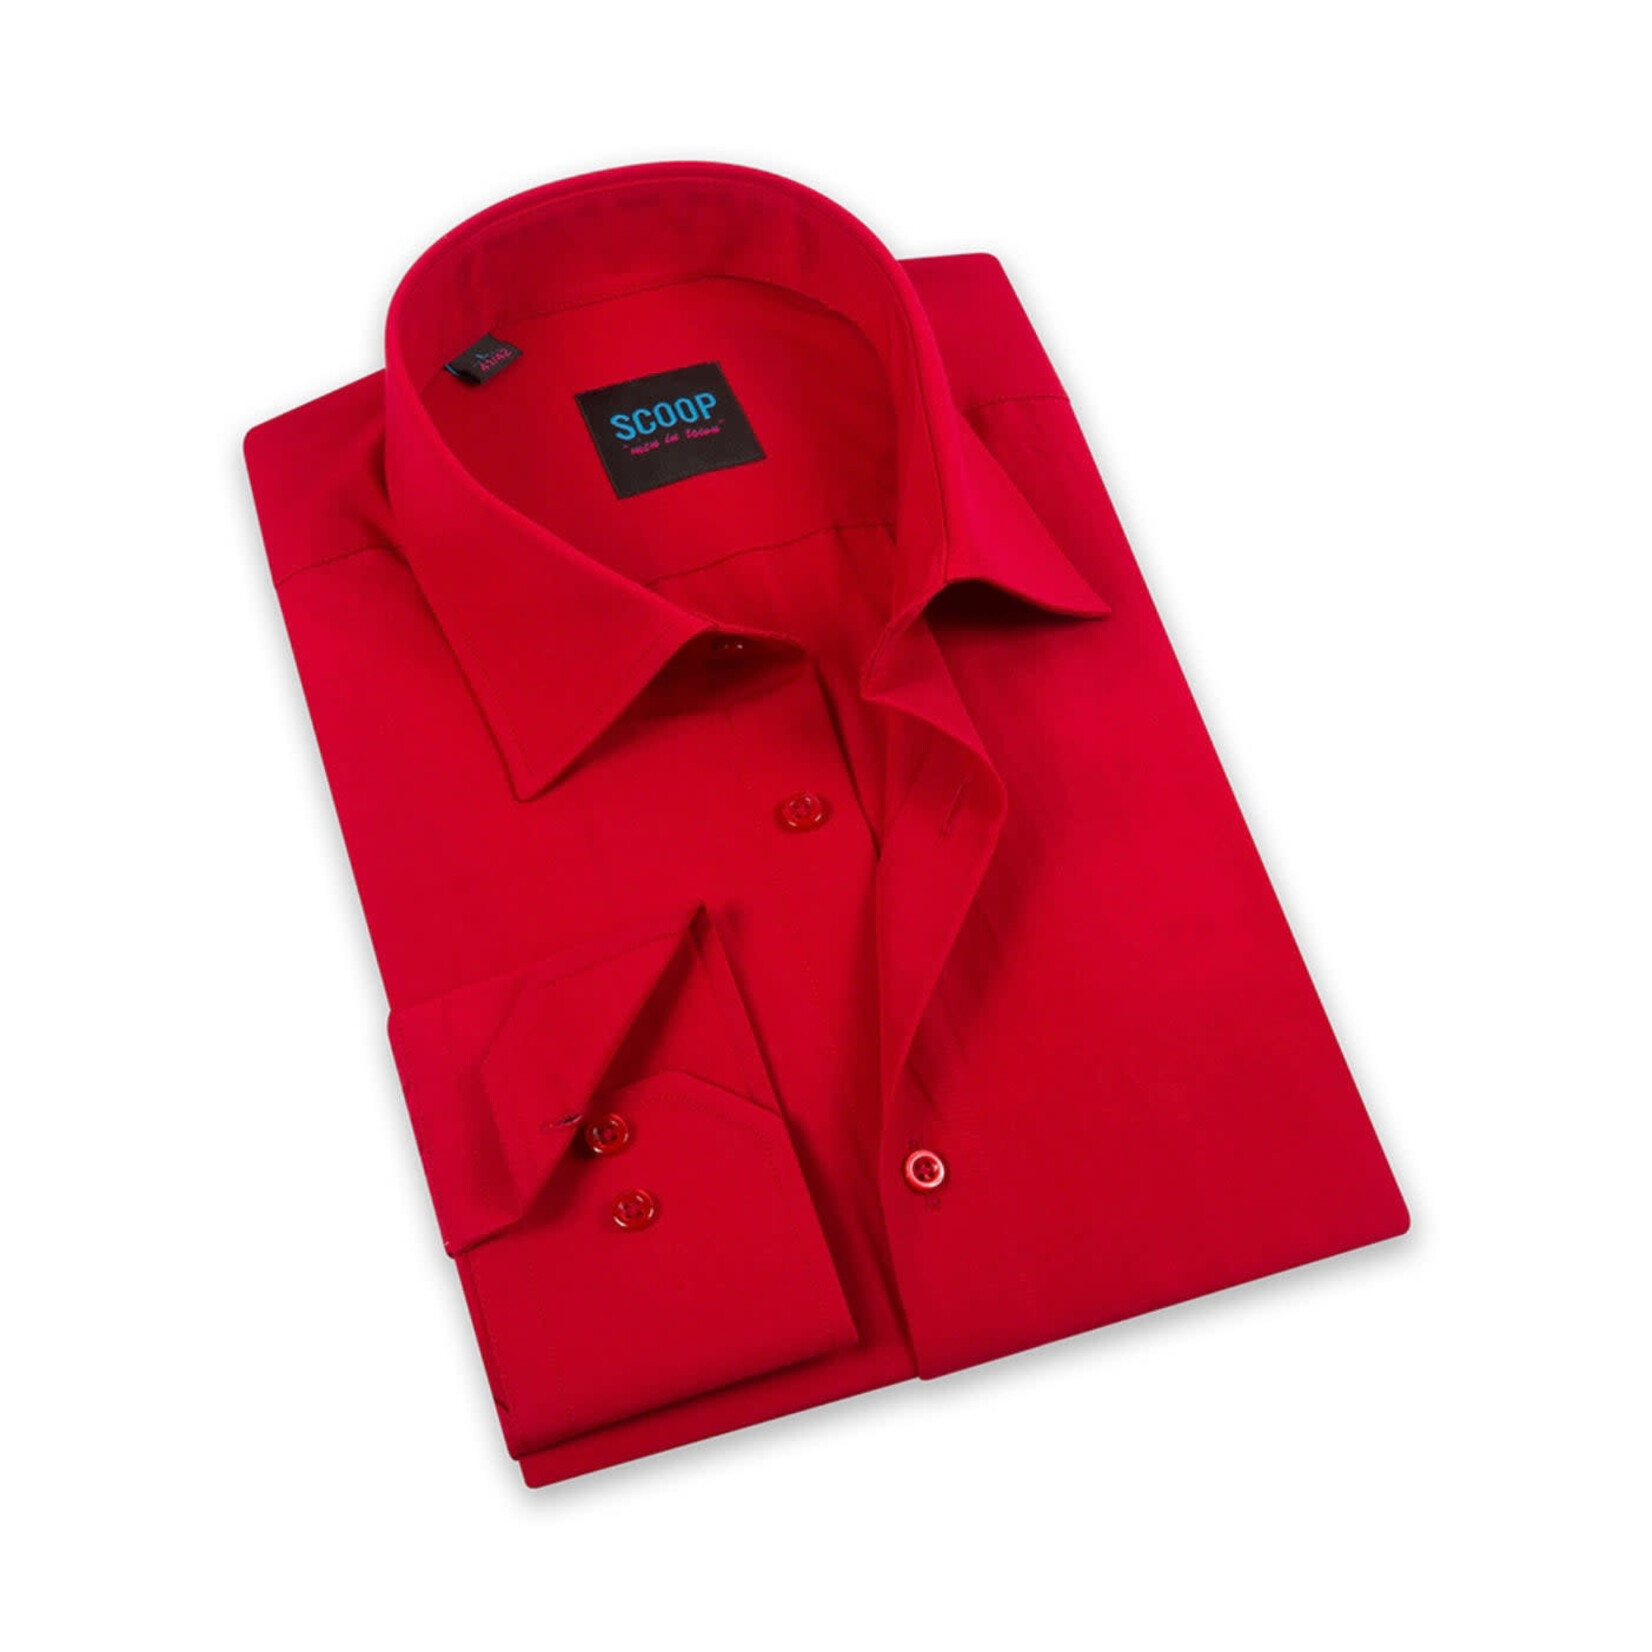 Scoop Grady Men's Long Sleeve Dress Shirt Red